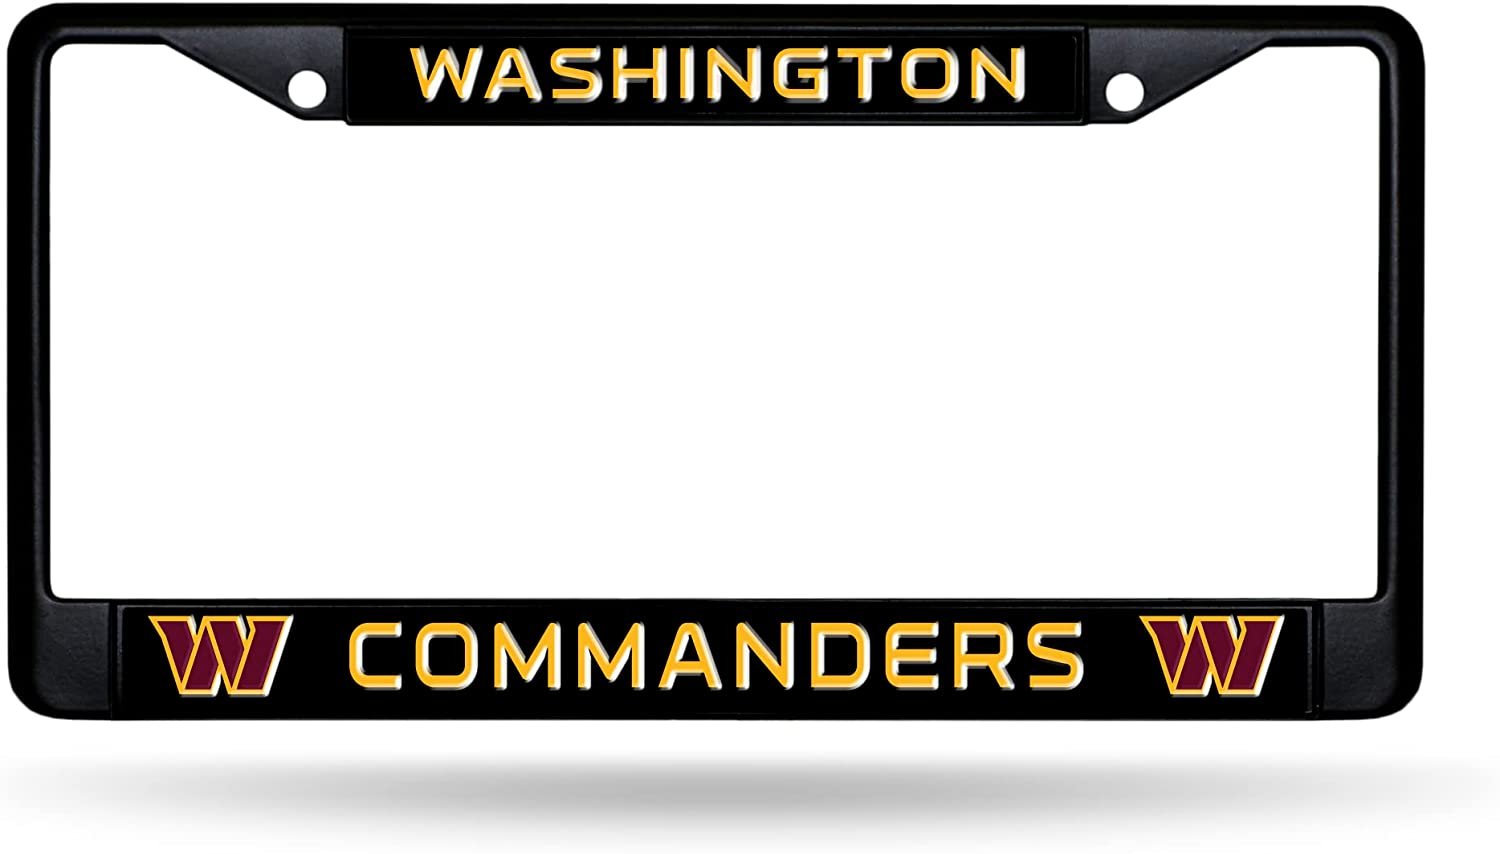 Washington Commanders Black Metal License Plate Frame Chrome Tag Cover 6x12 Inch